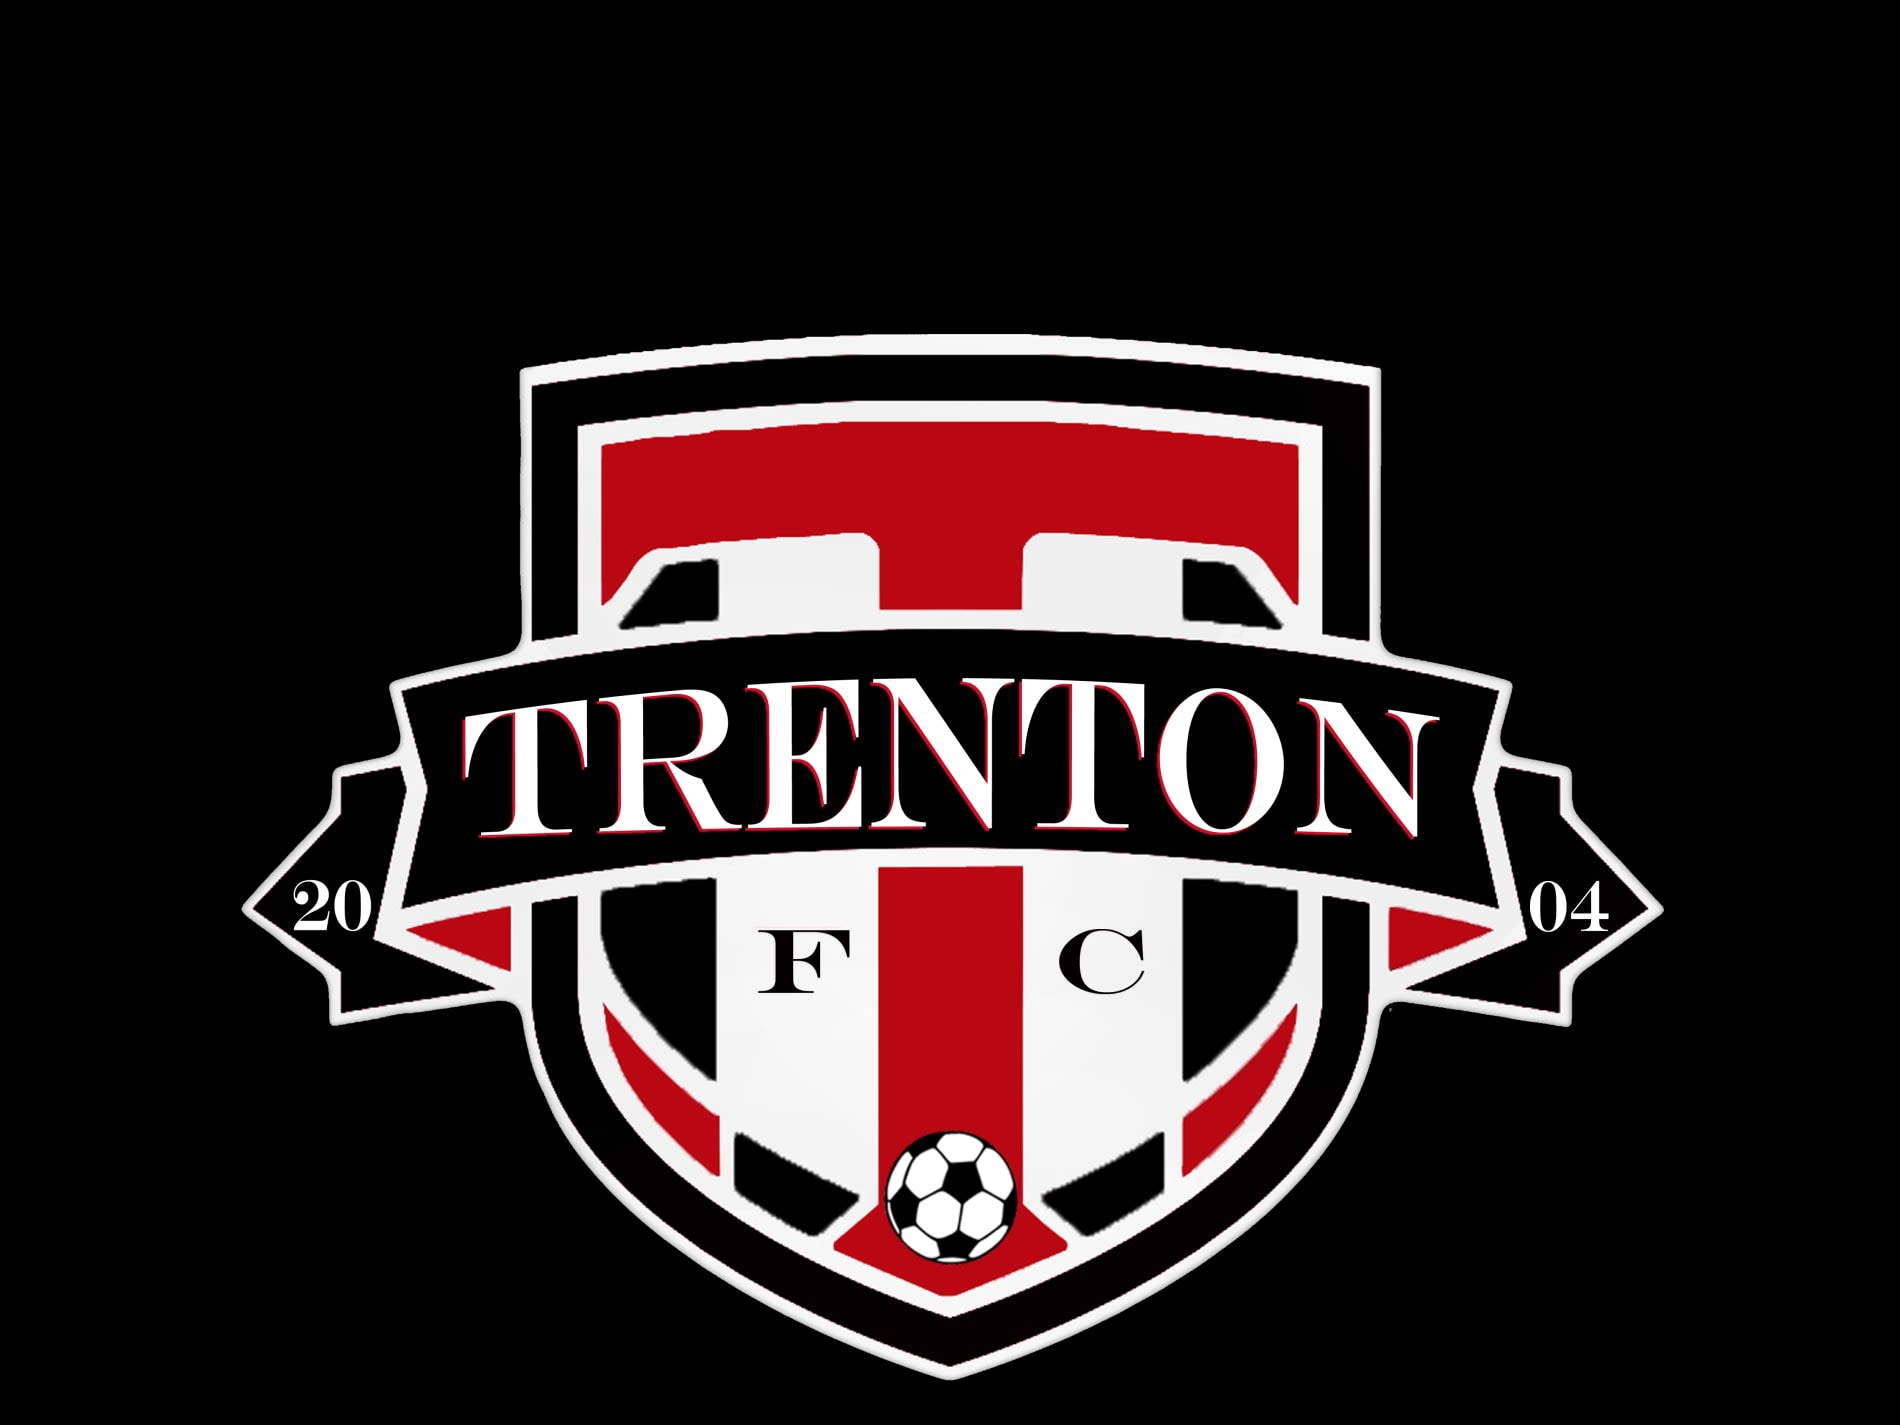 Trenton Football Club